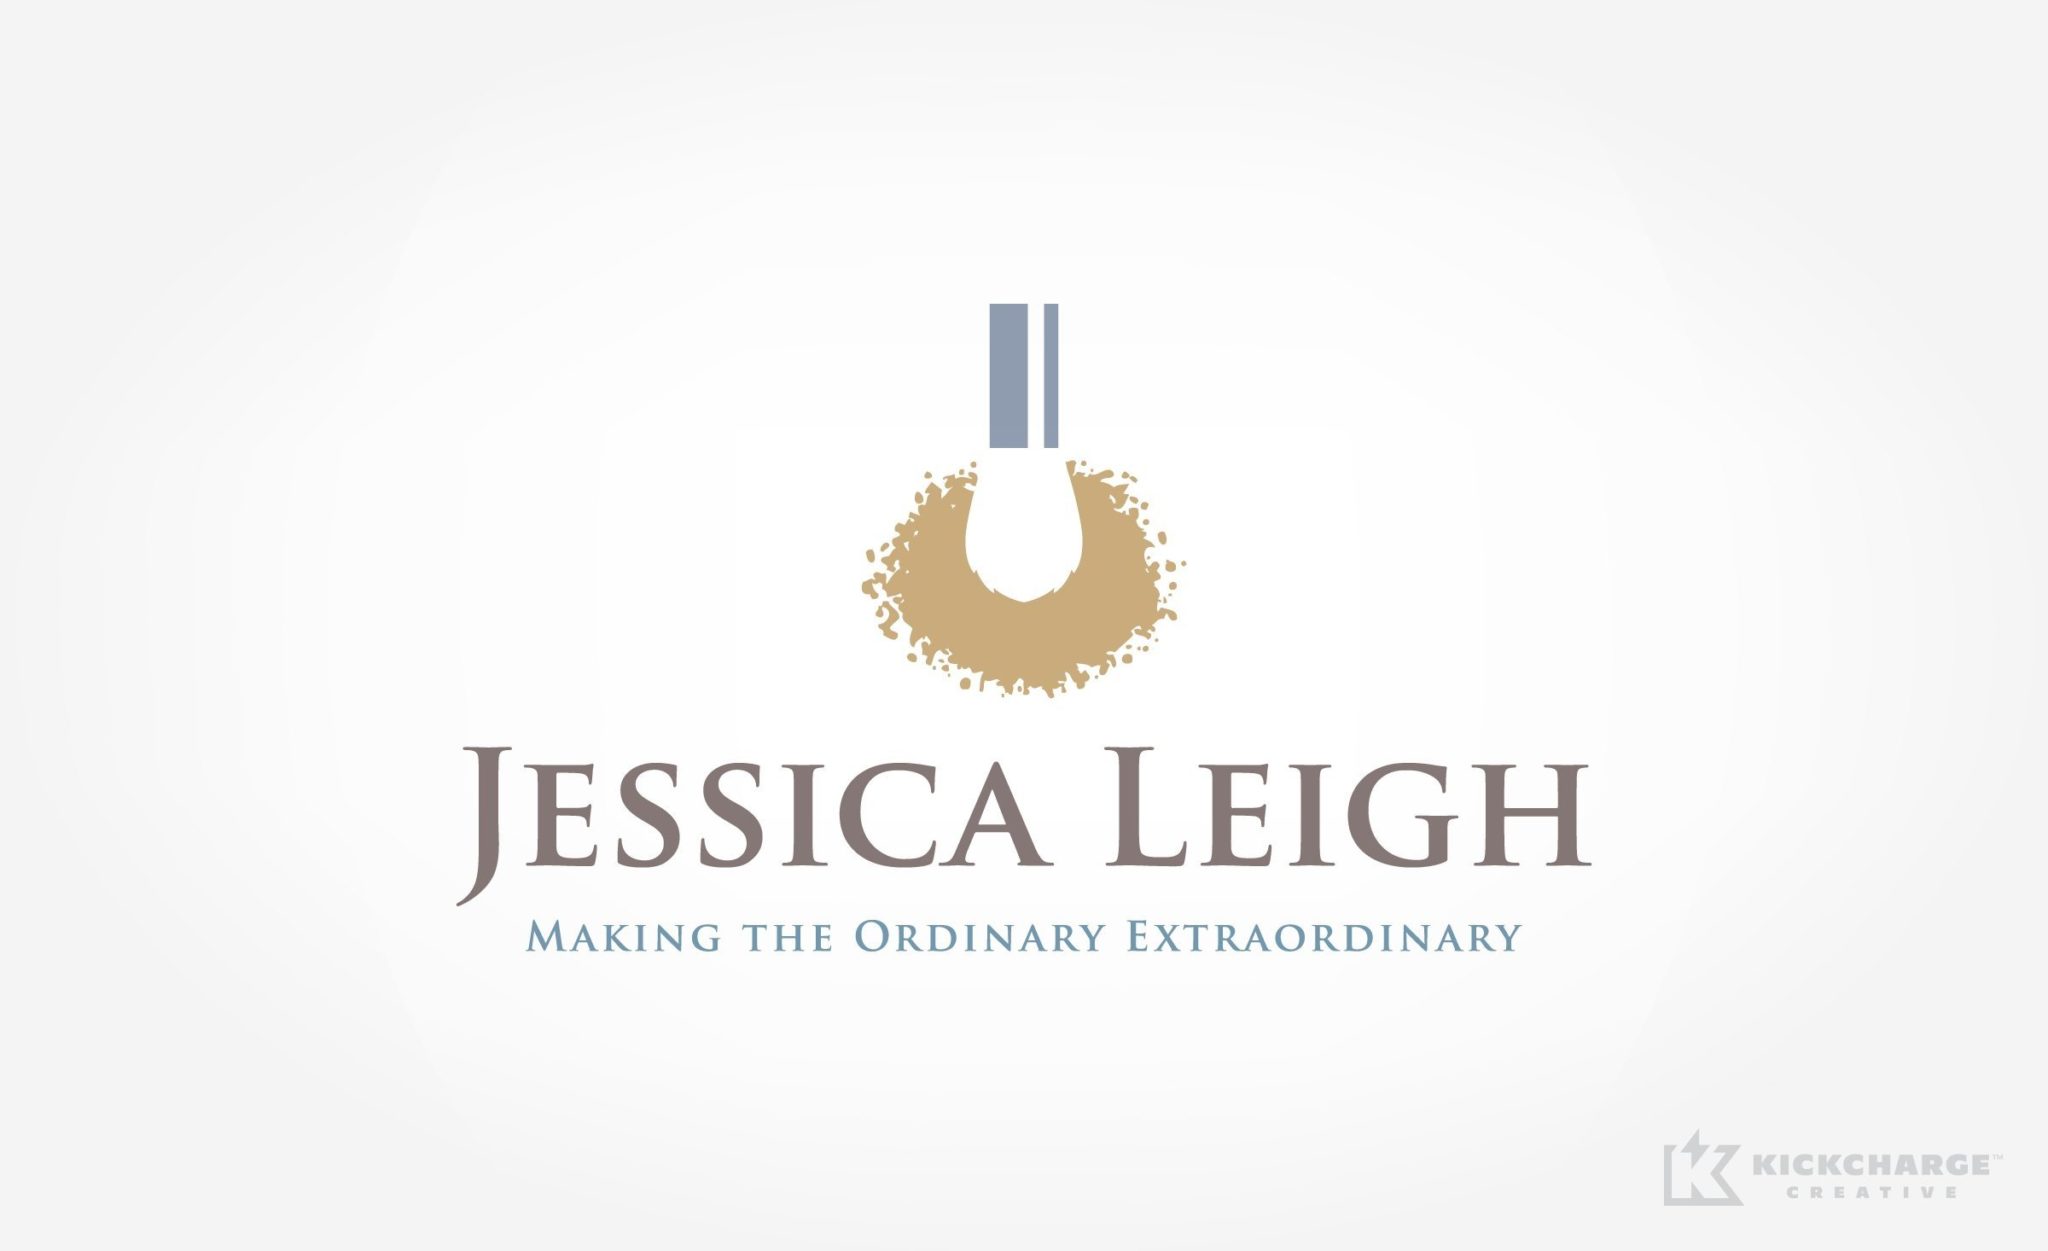 Jessica Leigh